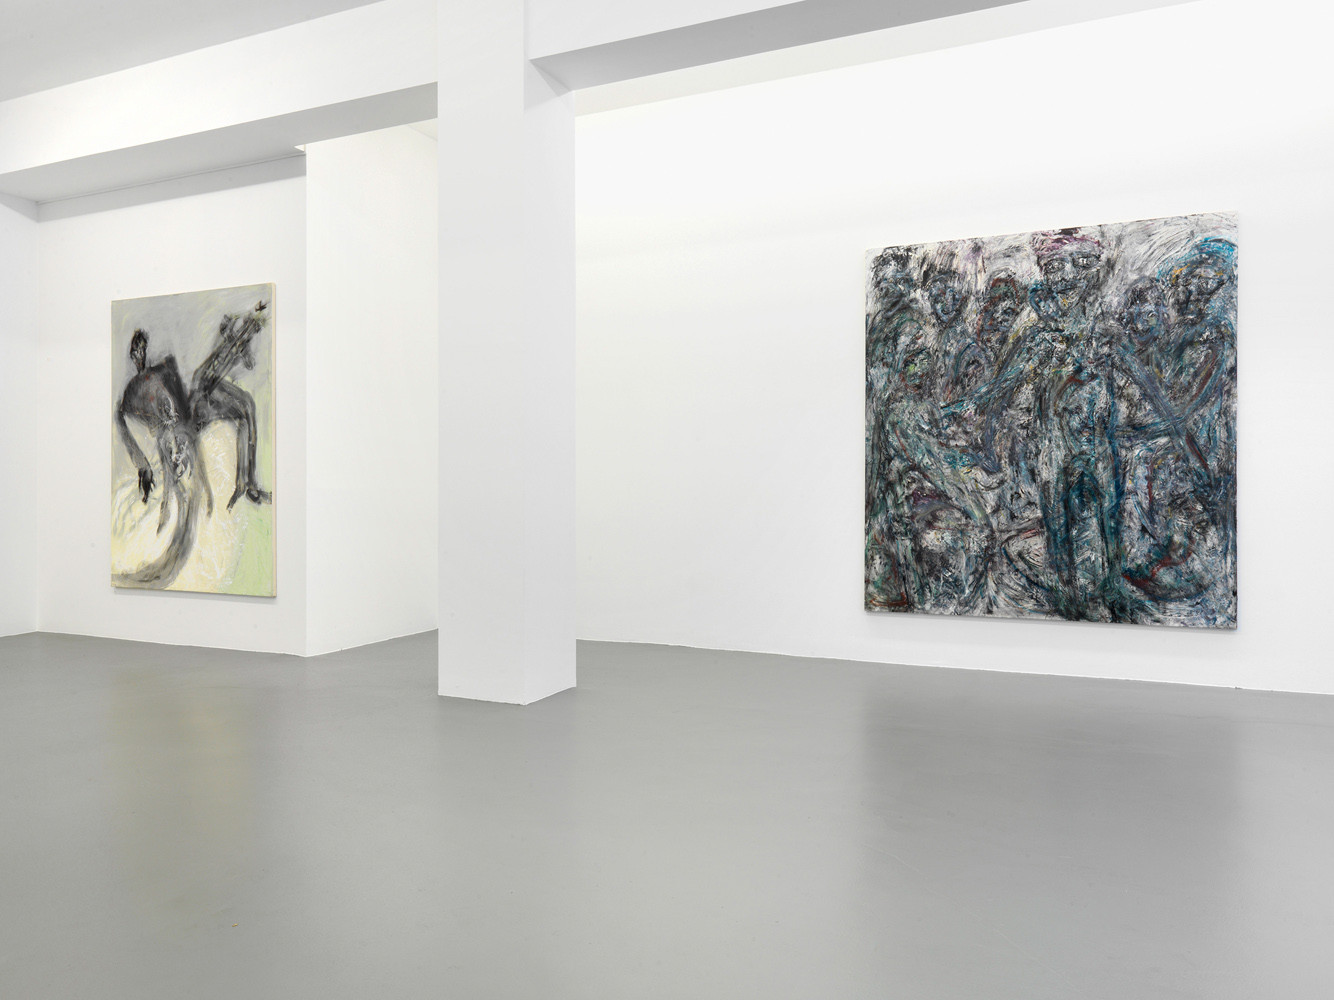 Martin Disler, ‘Malerei’, Installation view, 2014